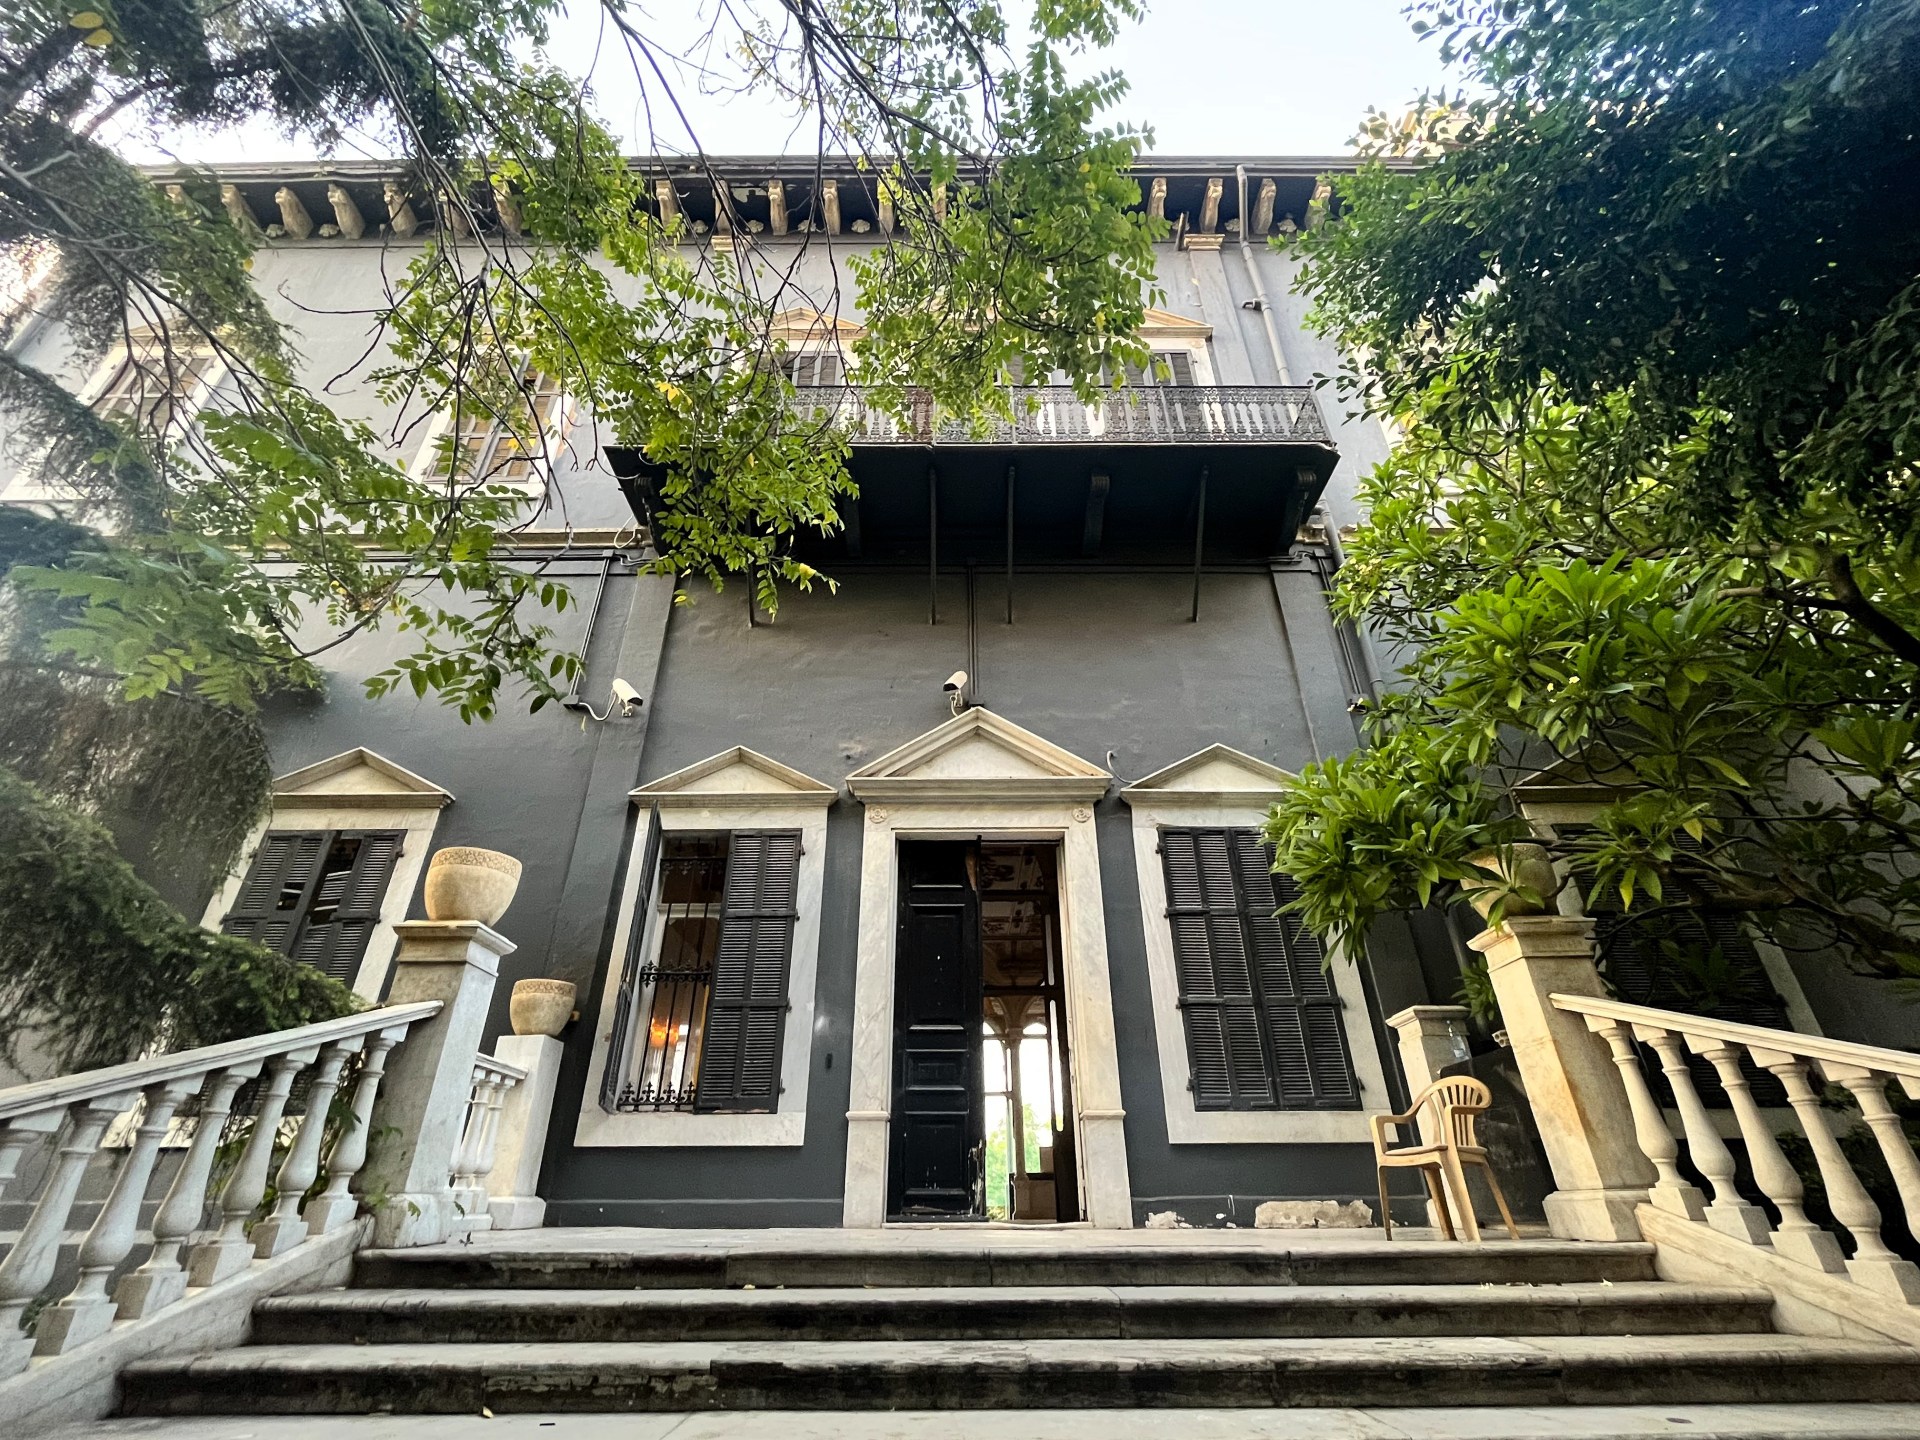 Villa Mokbel: New hope for Beirut’s forgotten architectural gem | Features